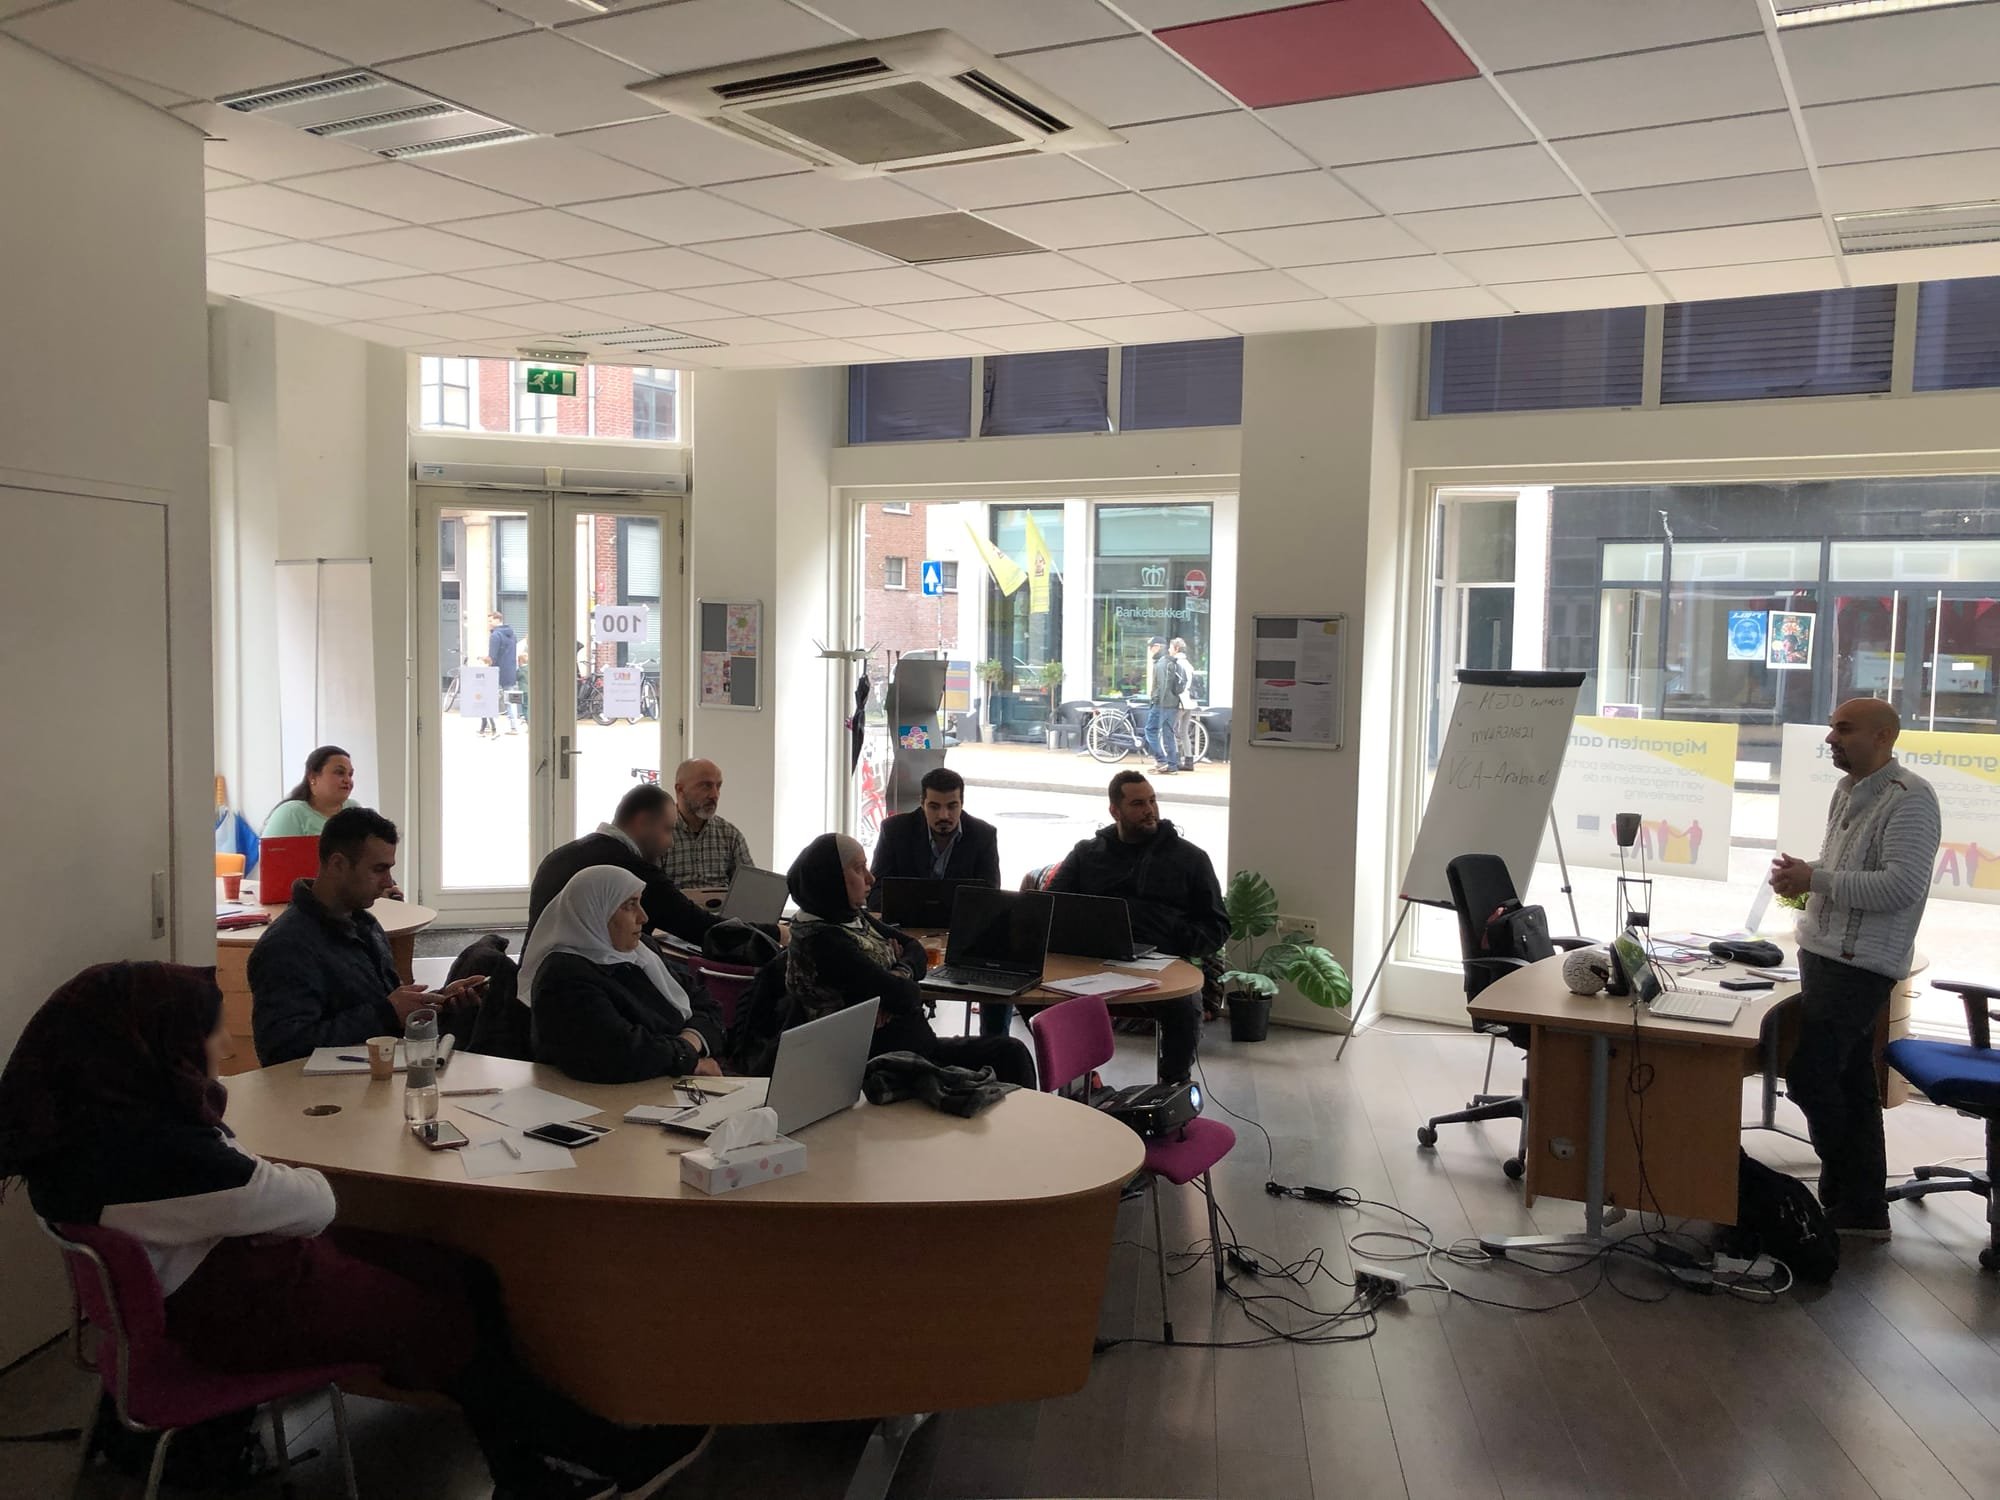 VCA-B Training in Arabic | MJD | Groningen